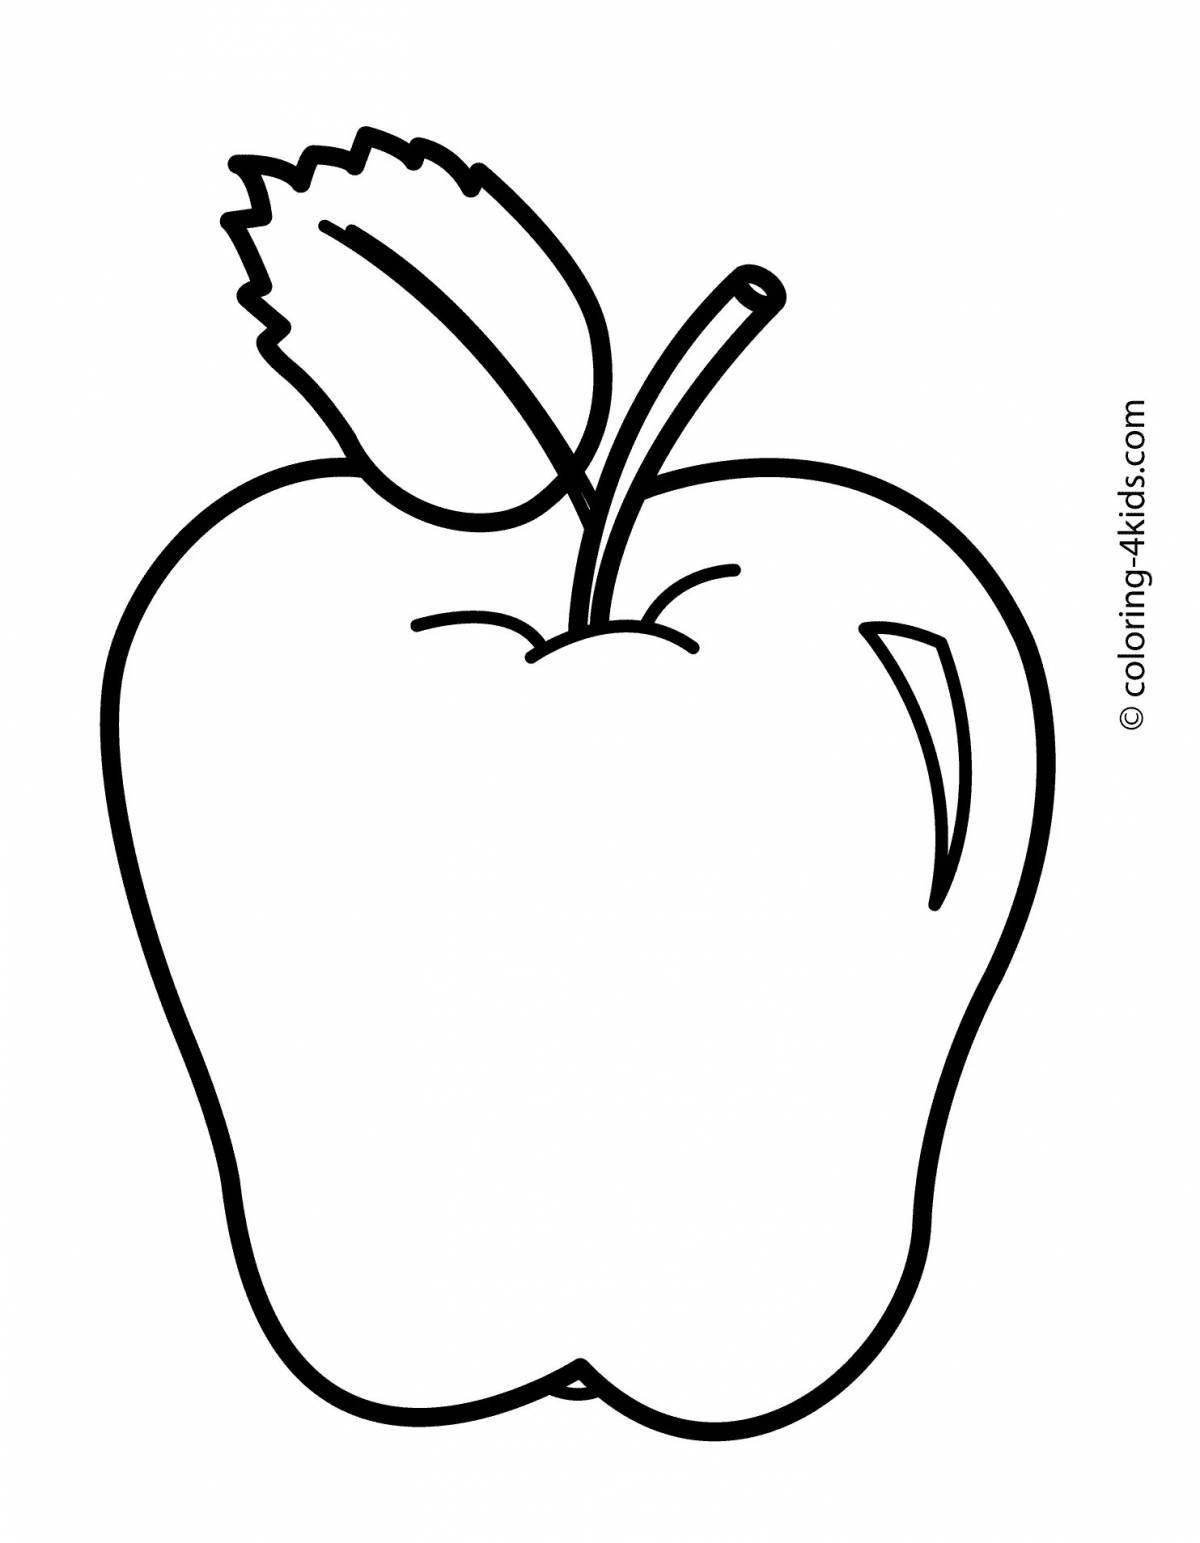 Креативная раскраска apple для детей 4-5 лет